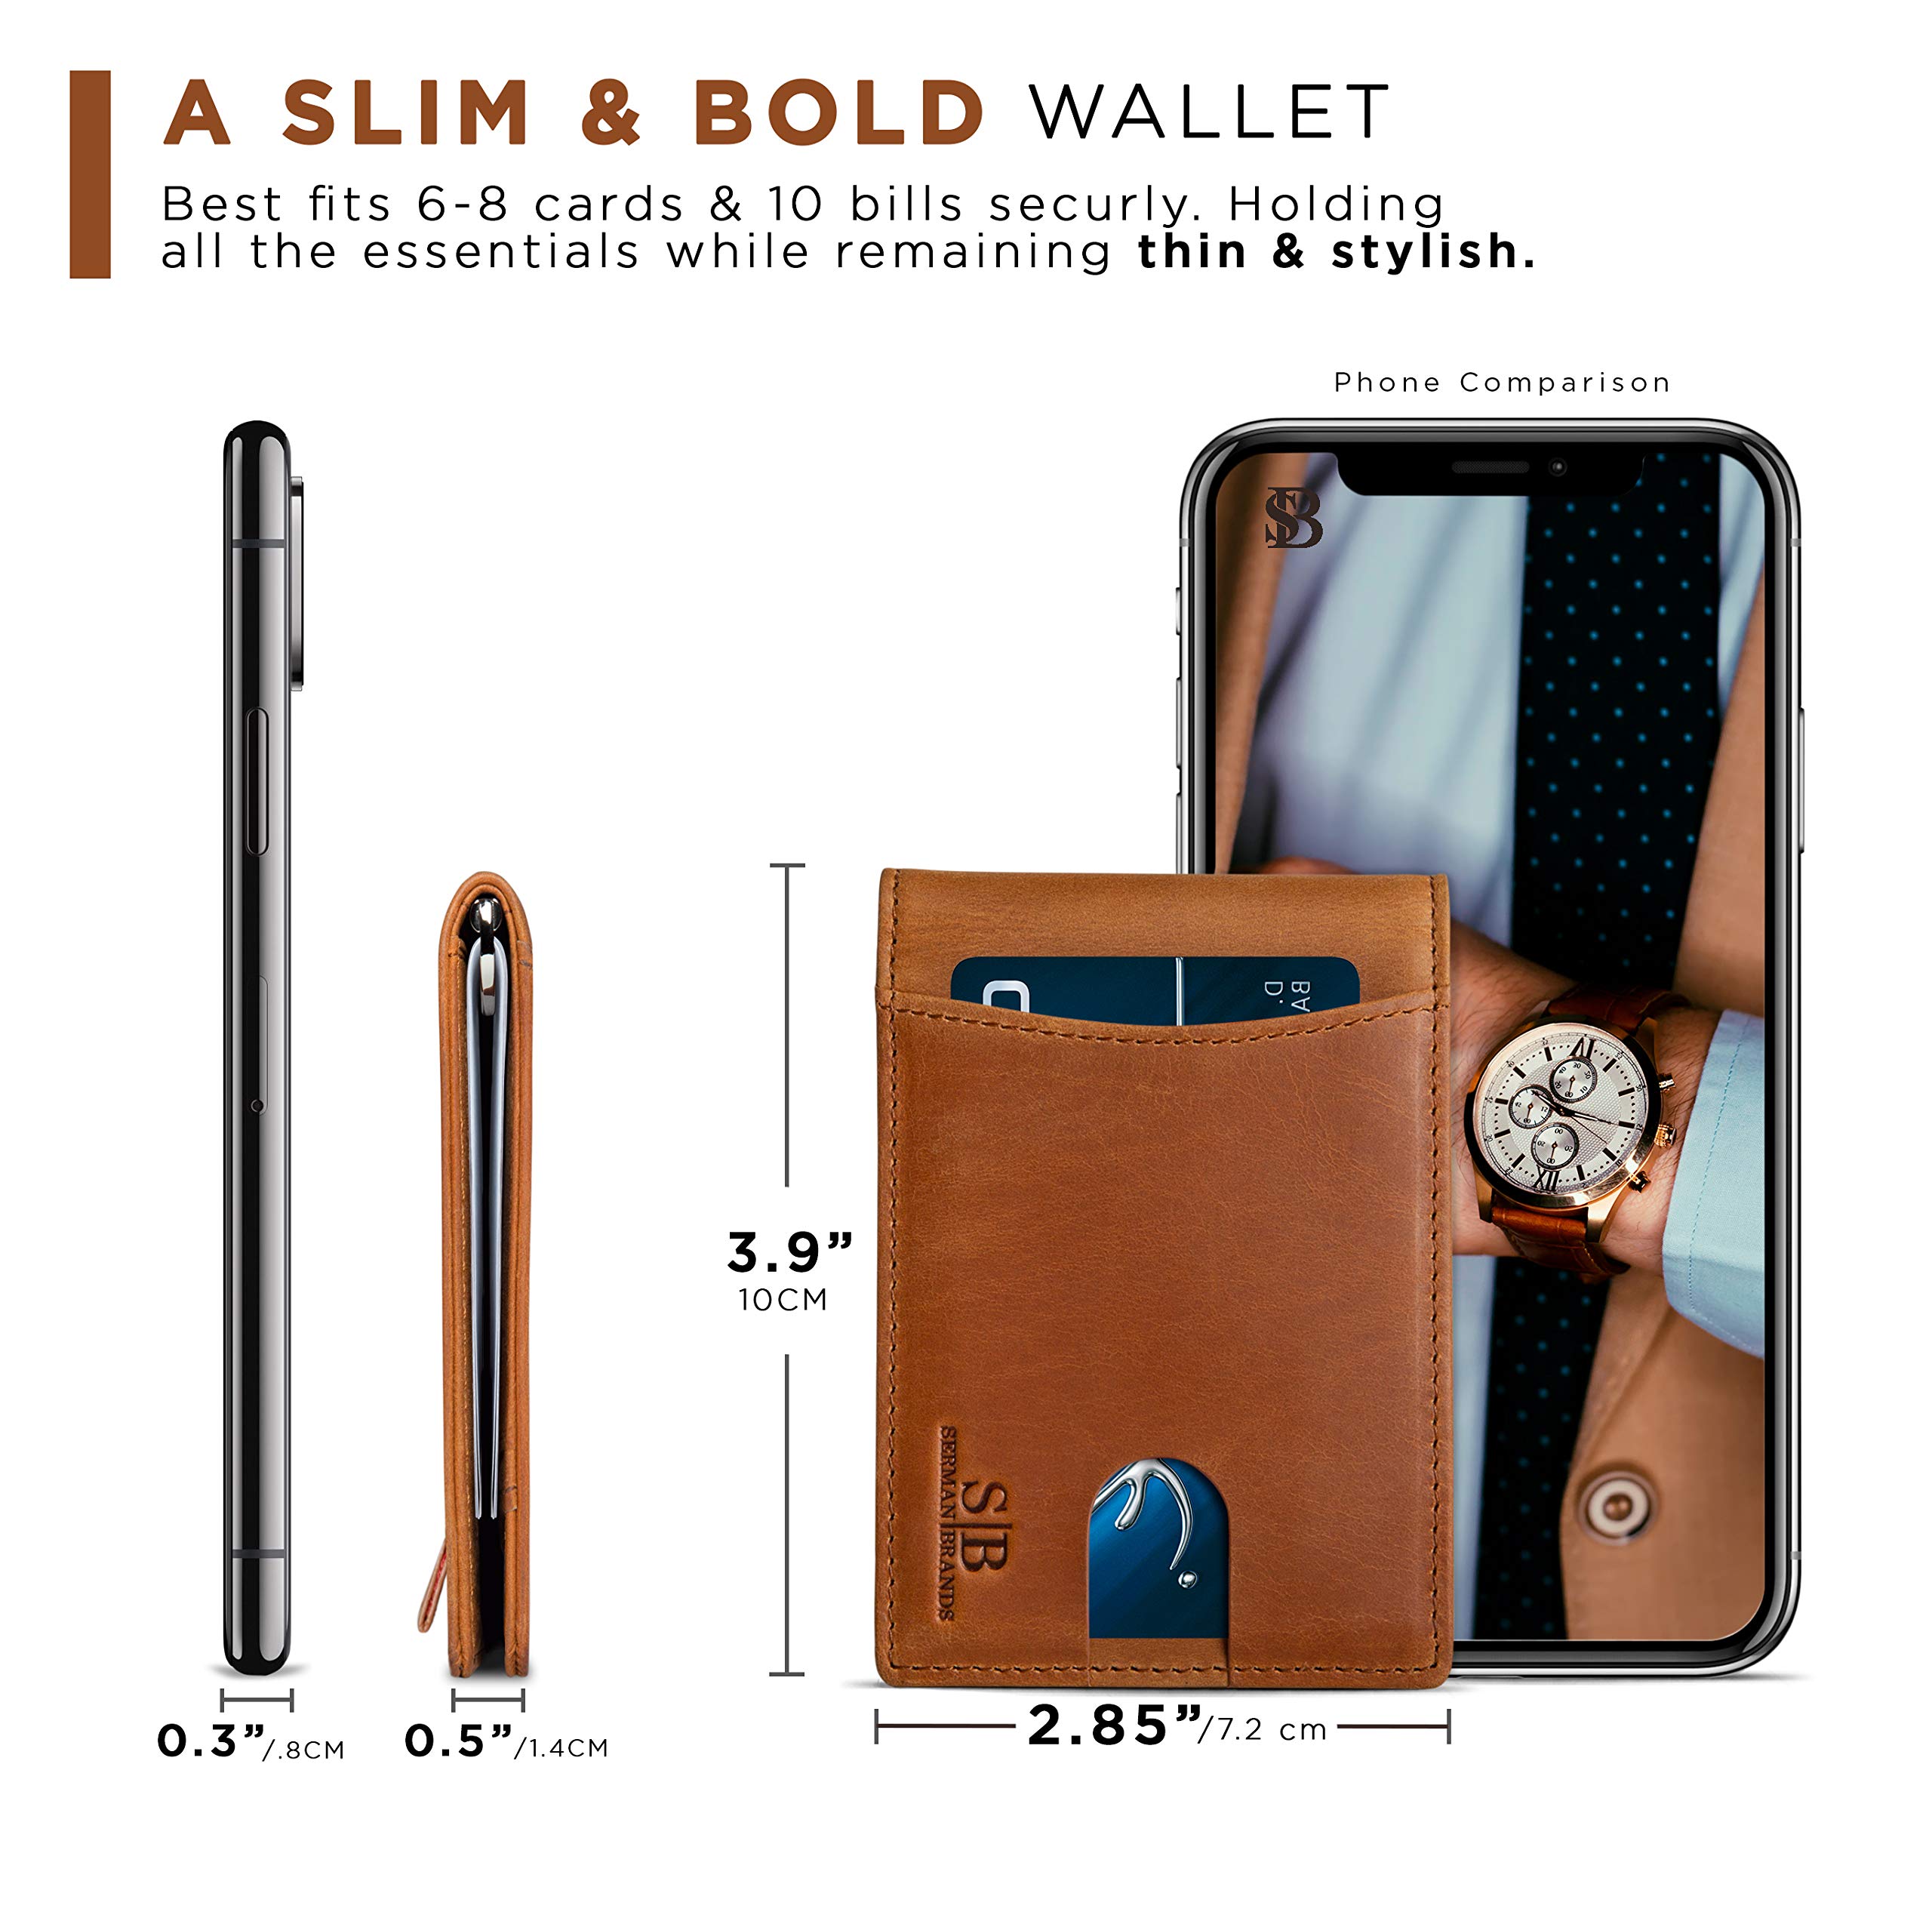 SERMAN BRANDS RFID Blocking Slim Bifold Genuine Leather Minimalist Front Pocket Wallets for Men with Money Clip Thin Mens